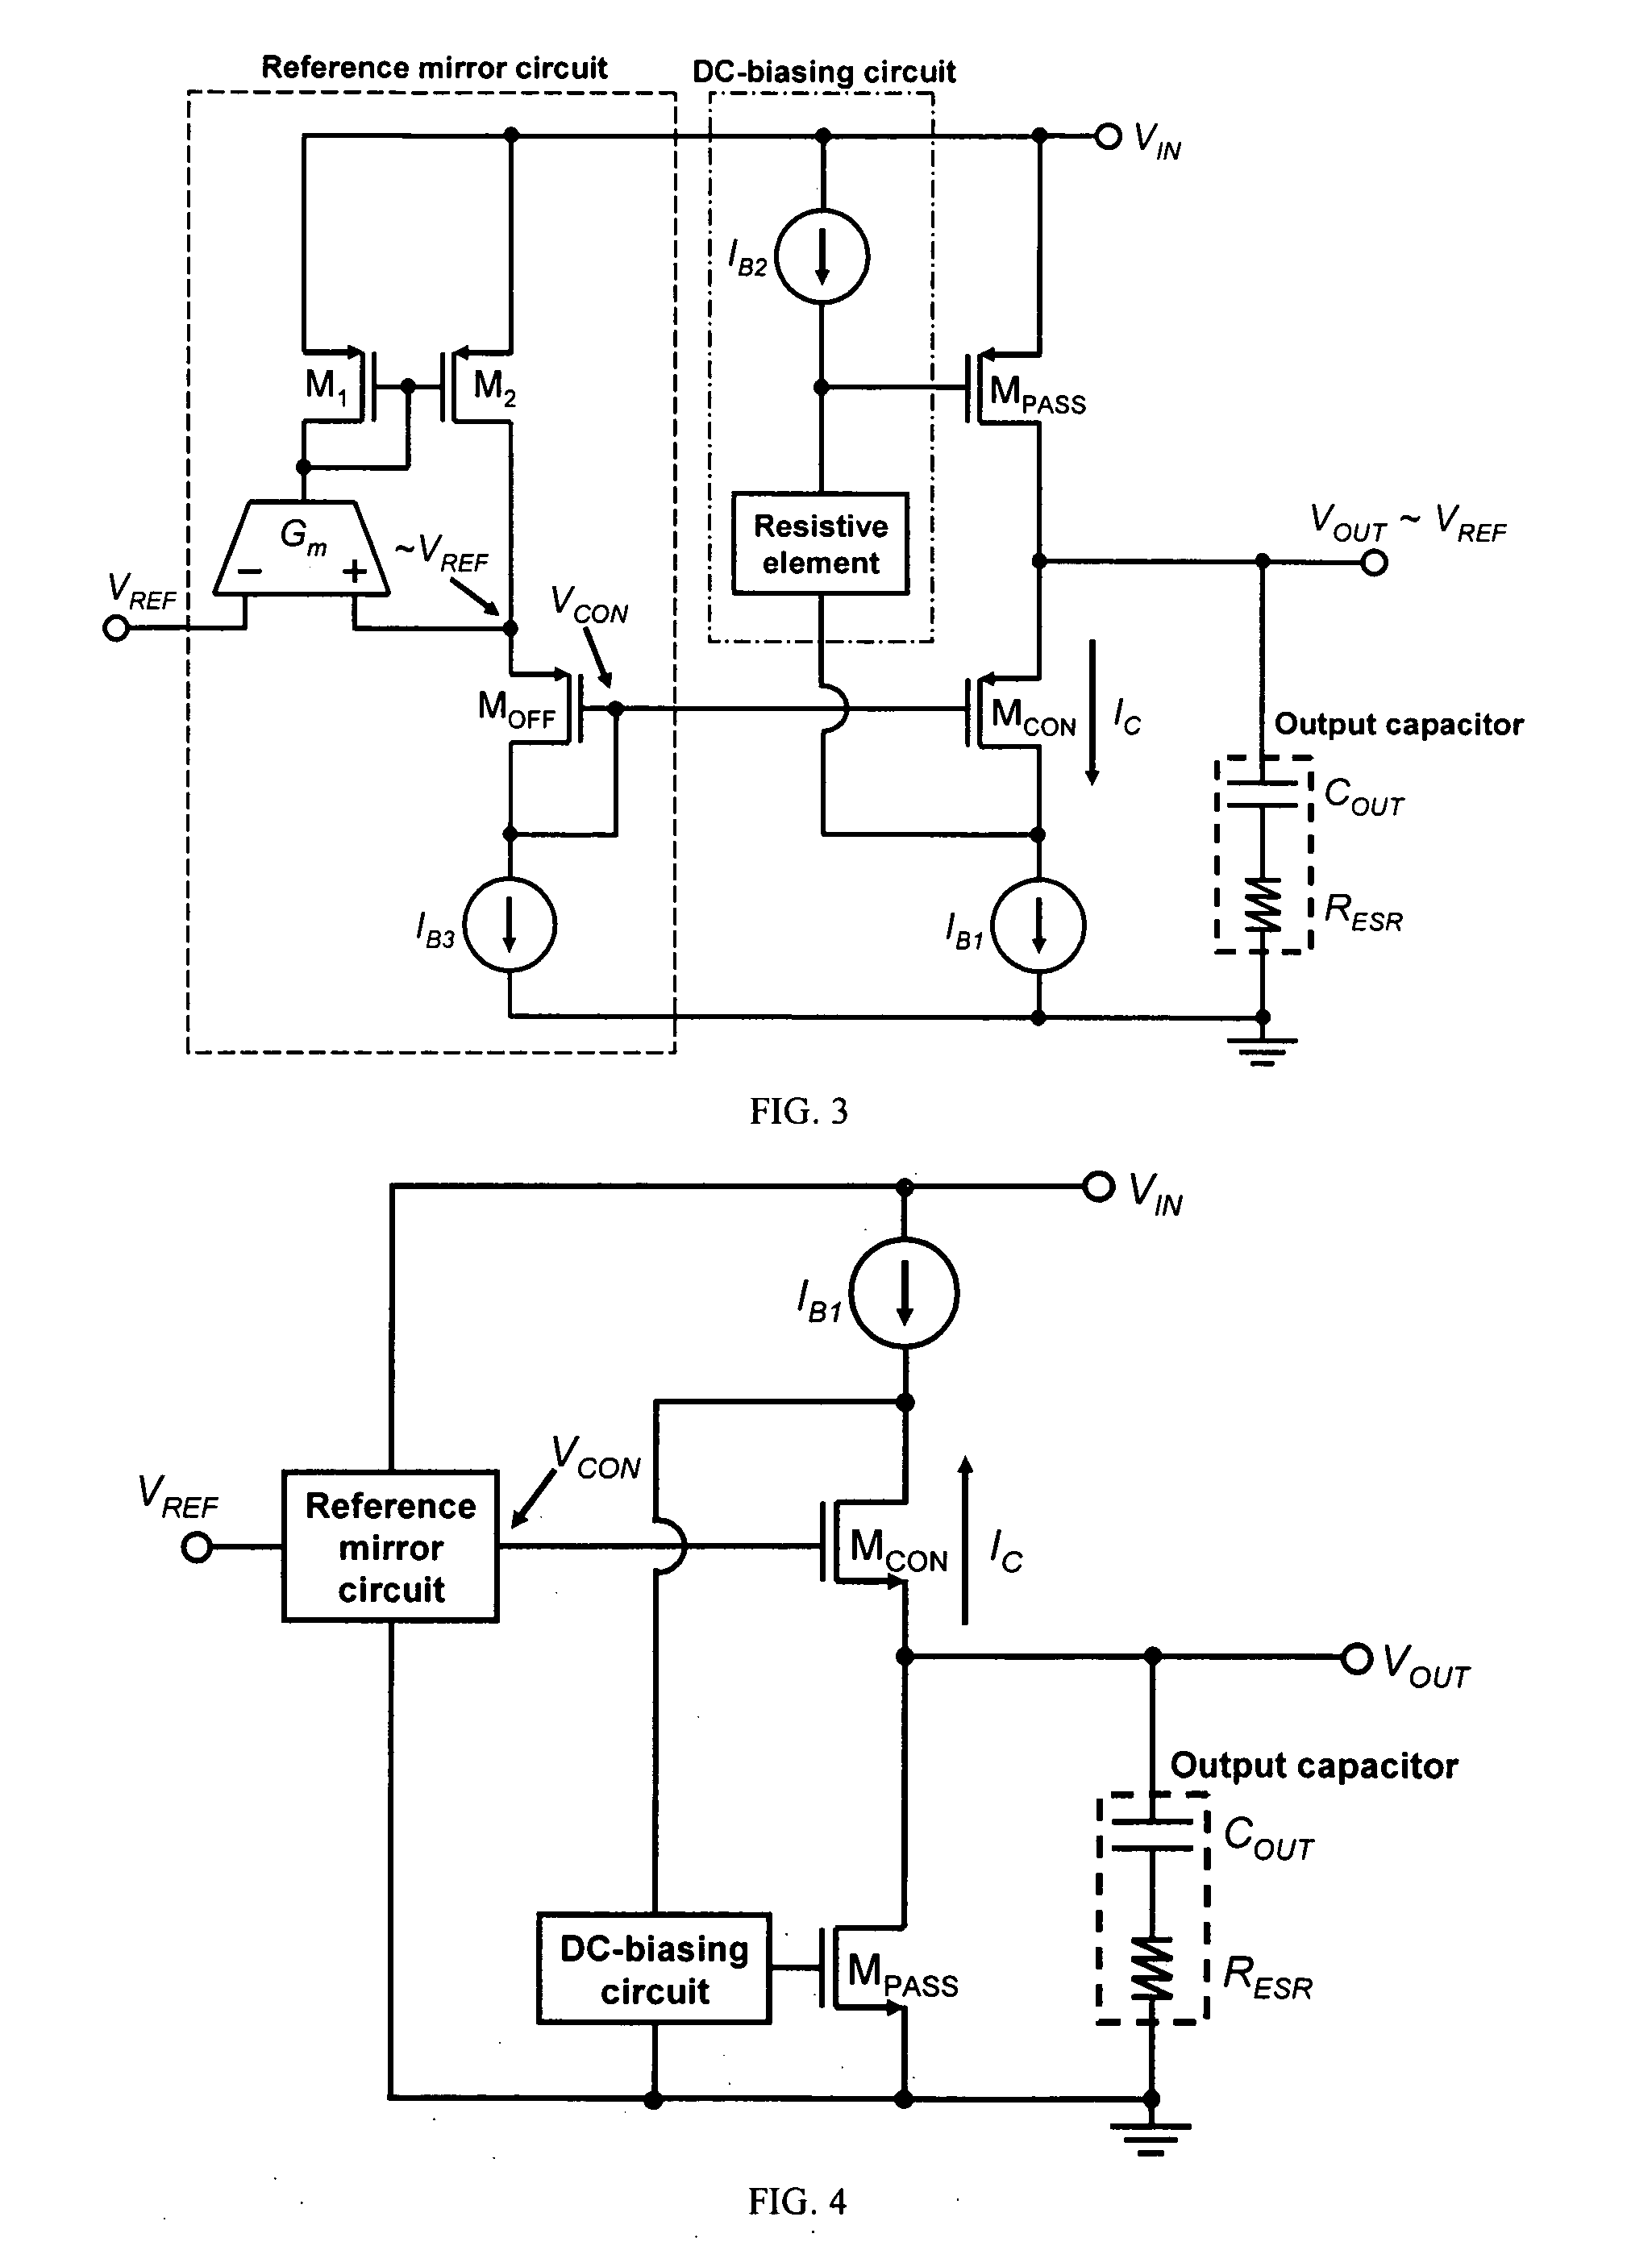 Single-transistor-control low-dropout regulator